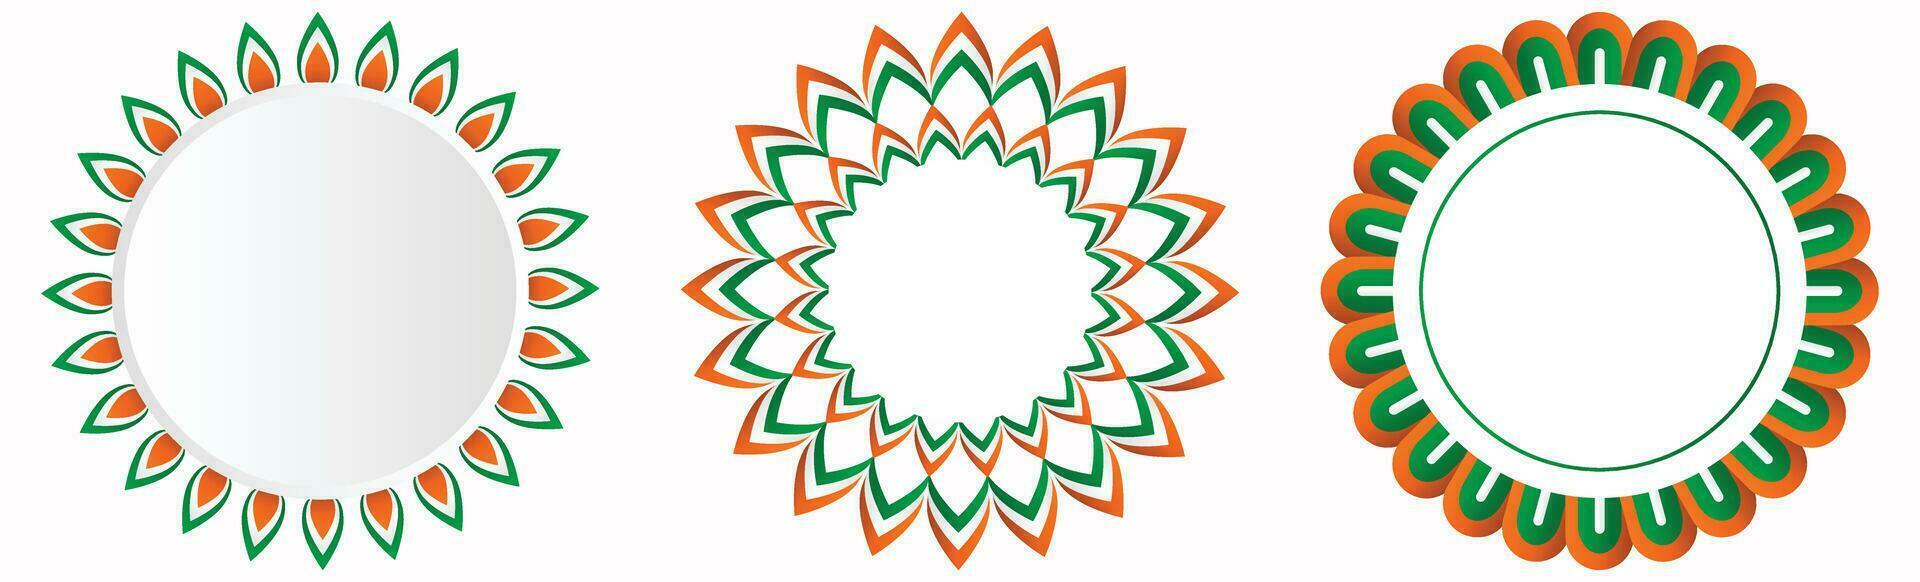 26 january, republic day, flowers, shape, flag, Indian independence day theme, orange white green design, Vector Illustration, indian flag background, india festival,Kargil Vijay Diwas,